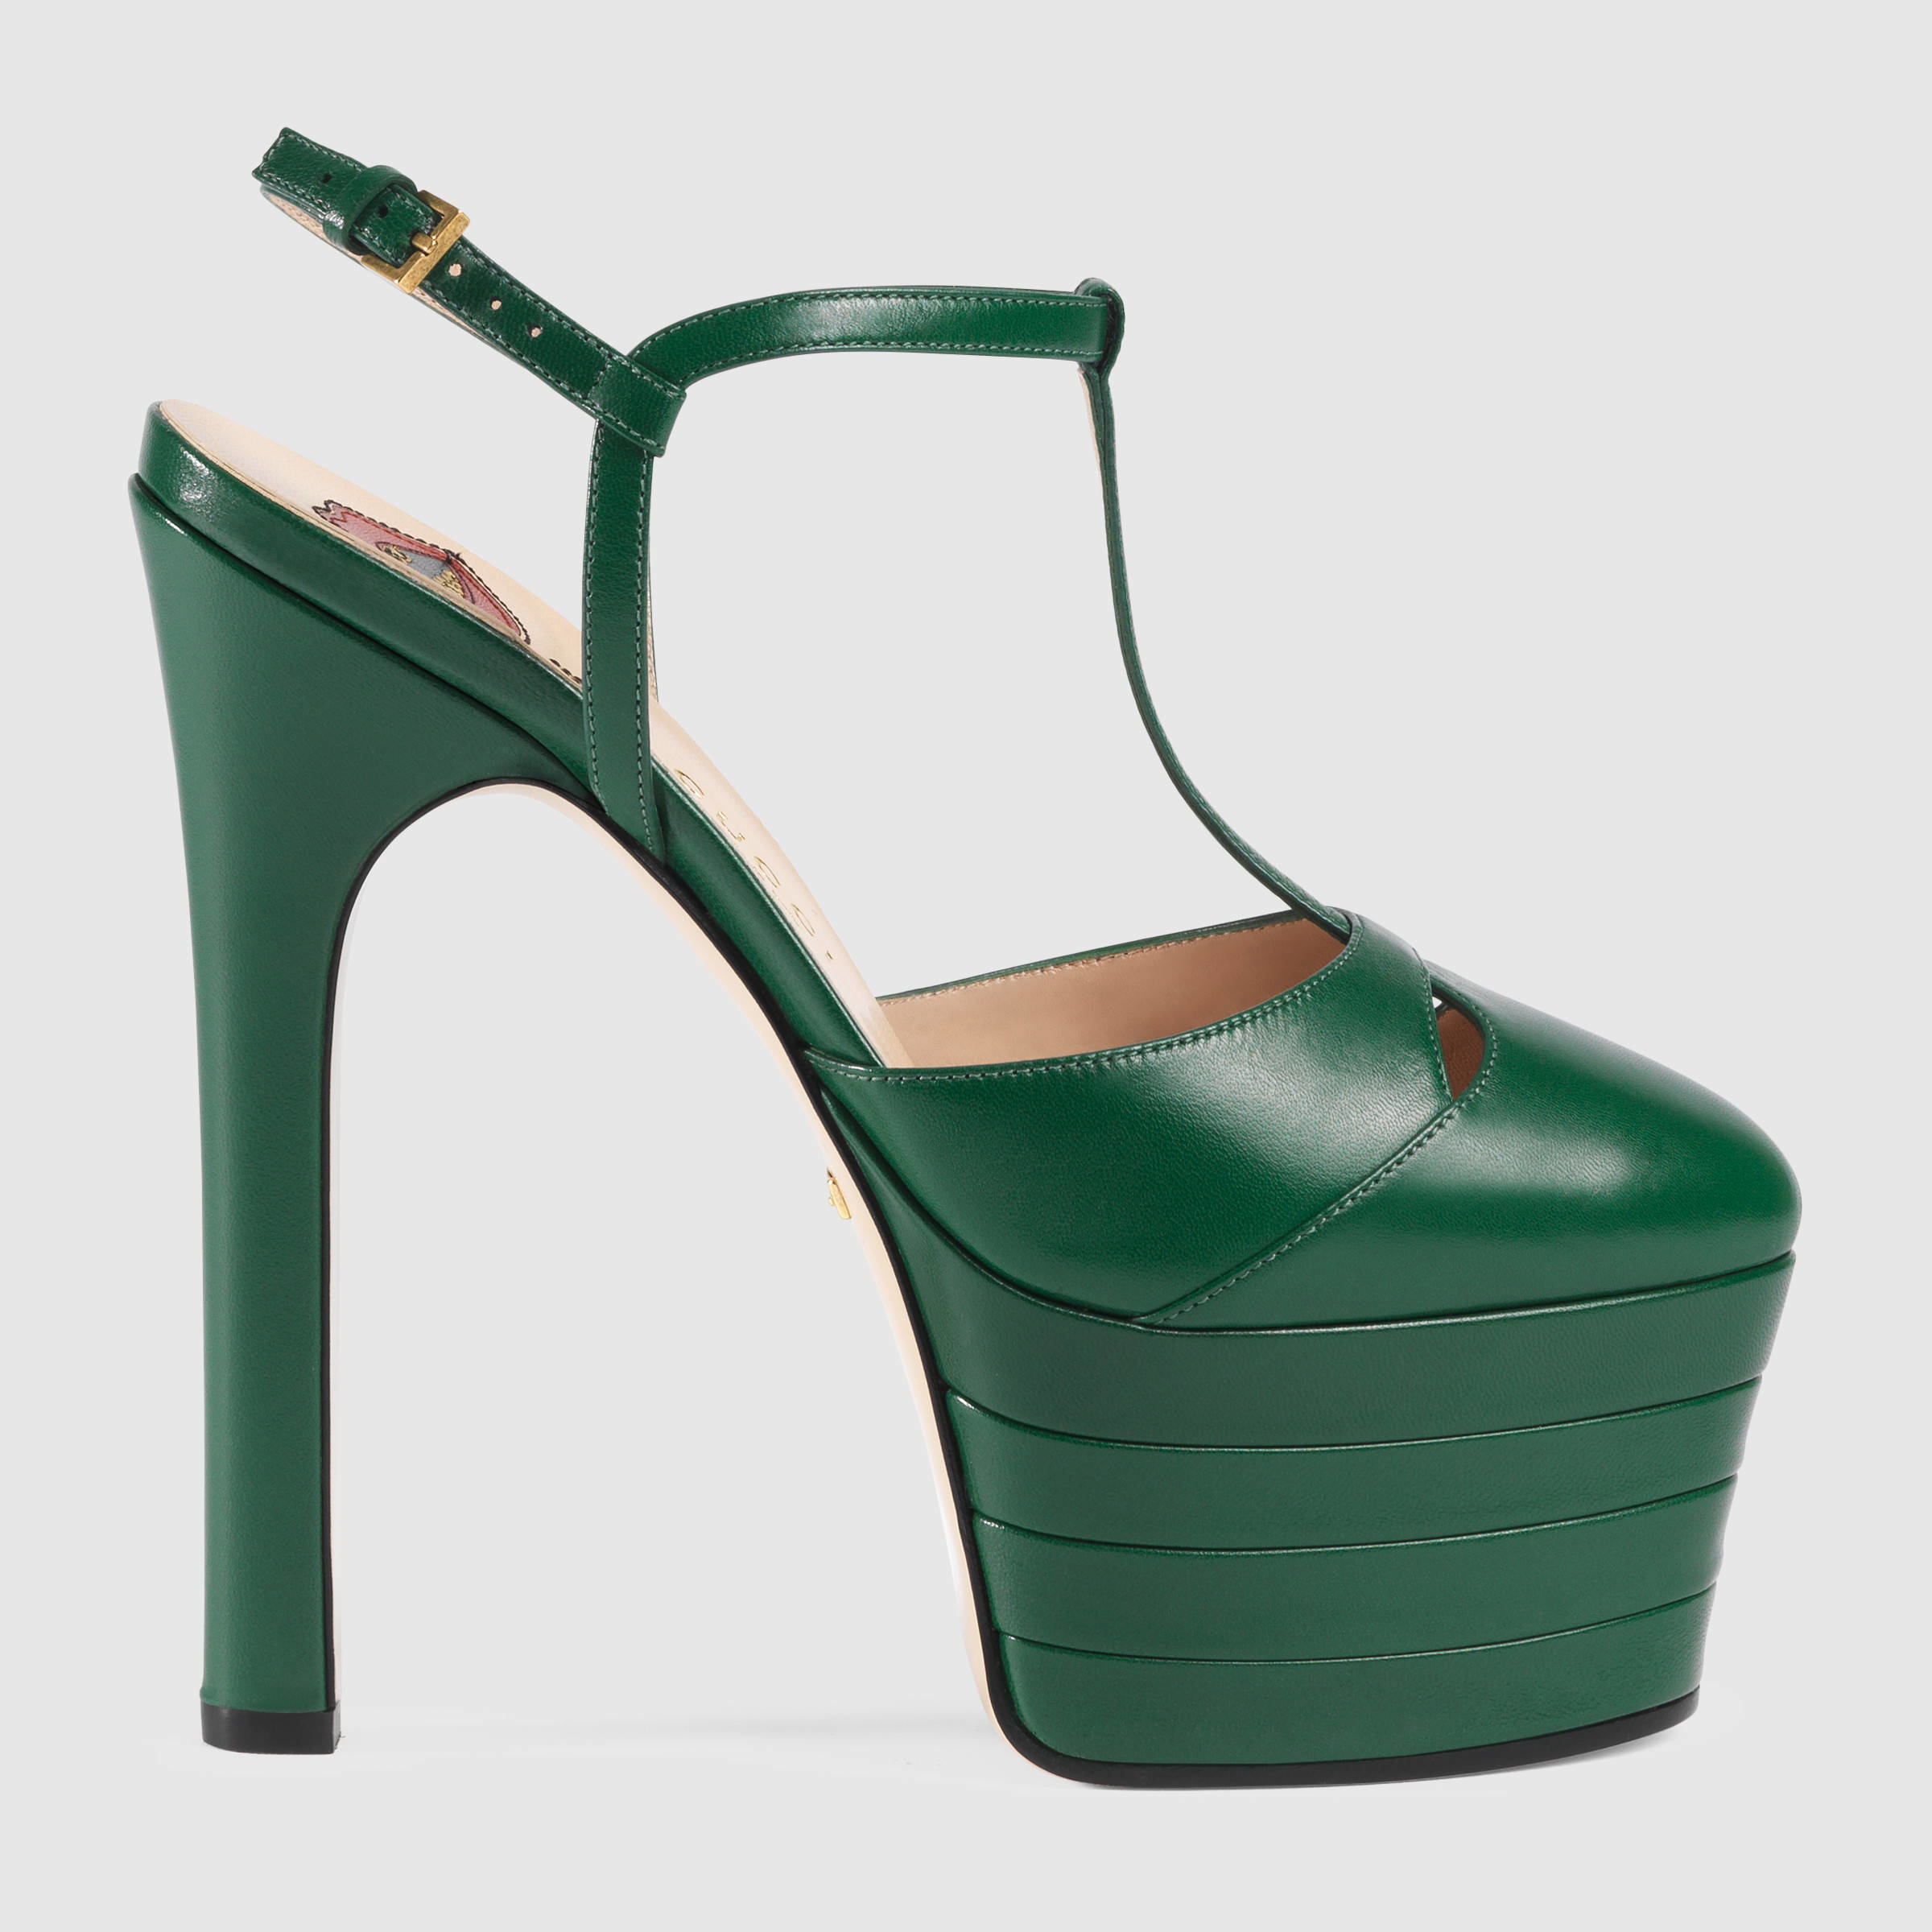 Gucci Leather Platform Pump in Green - Lyst